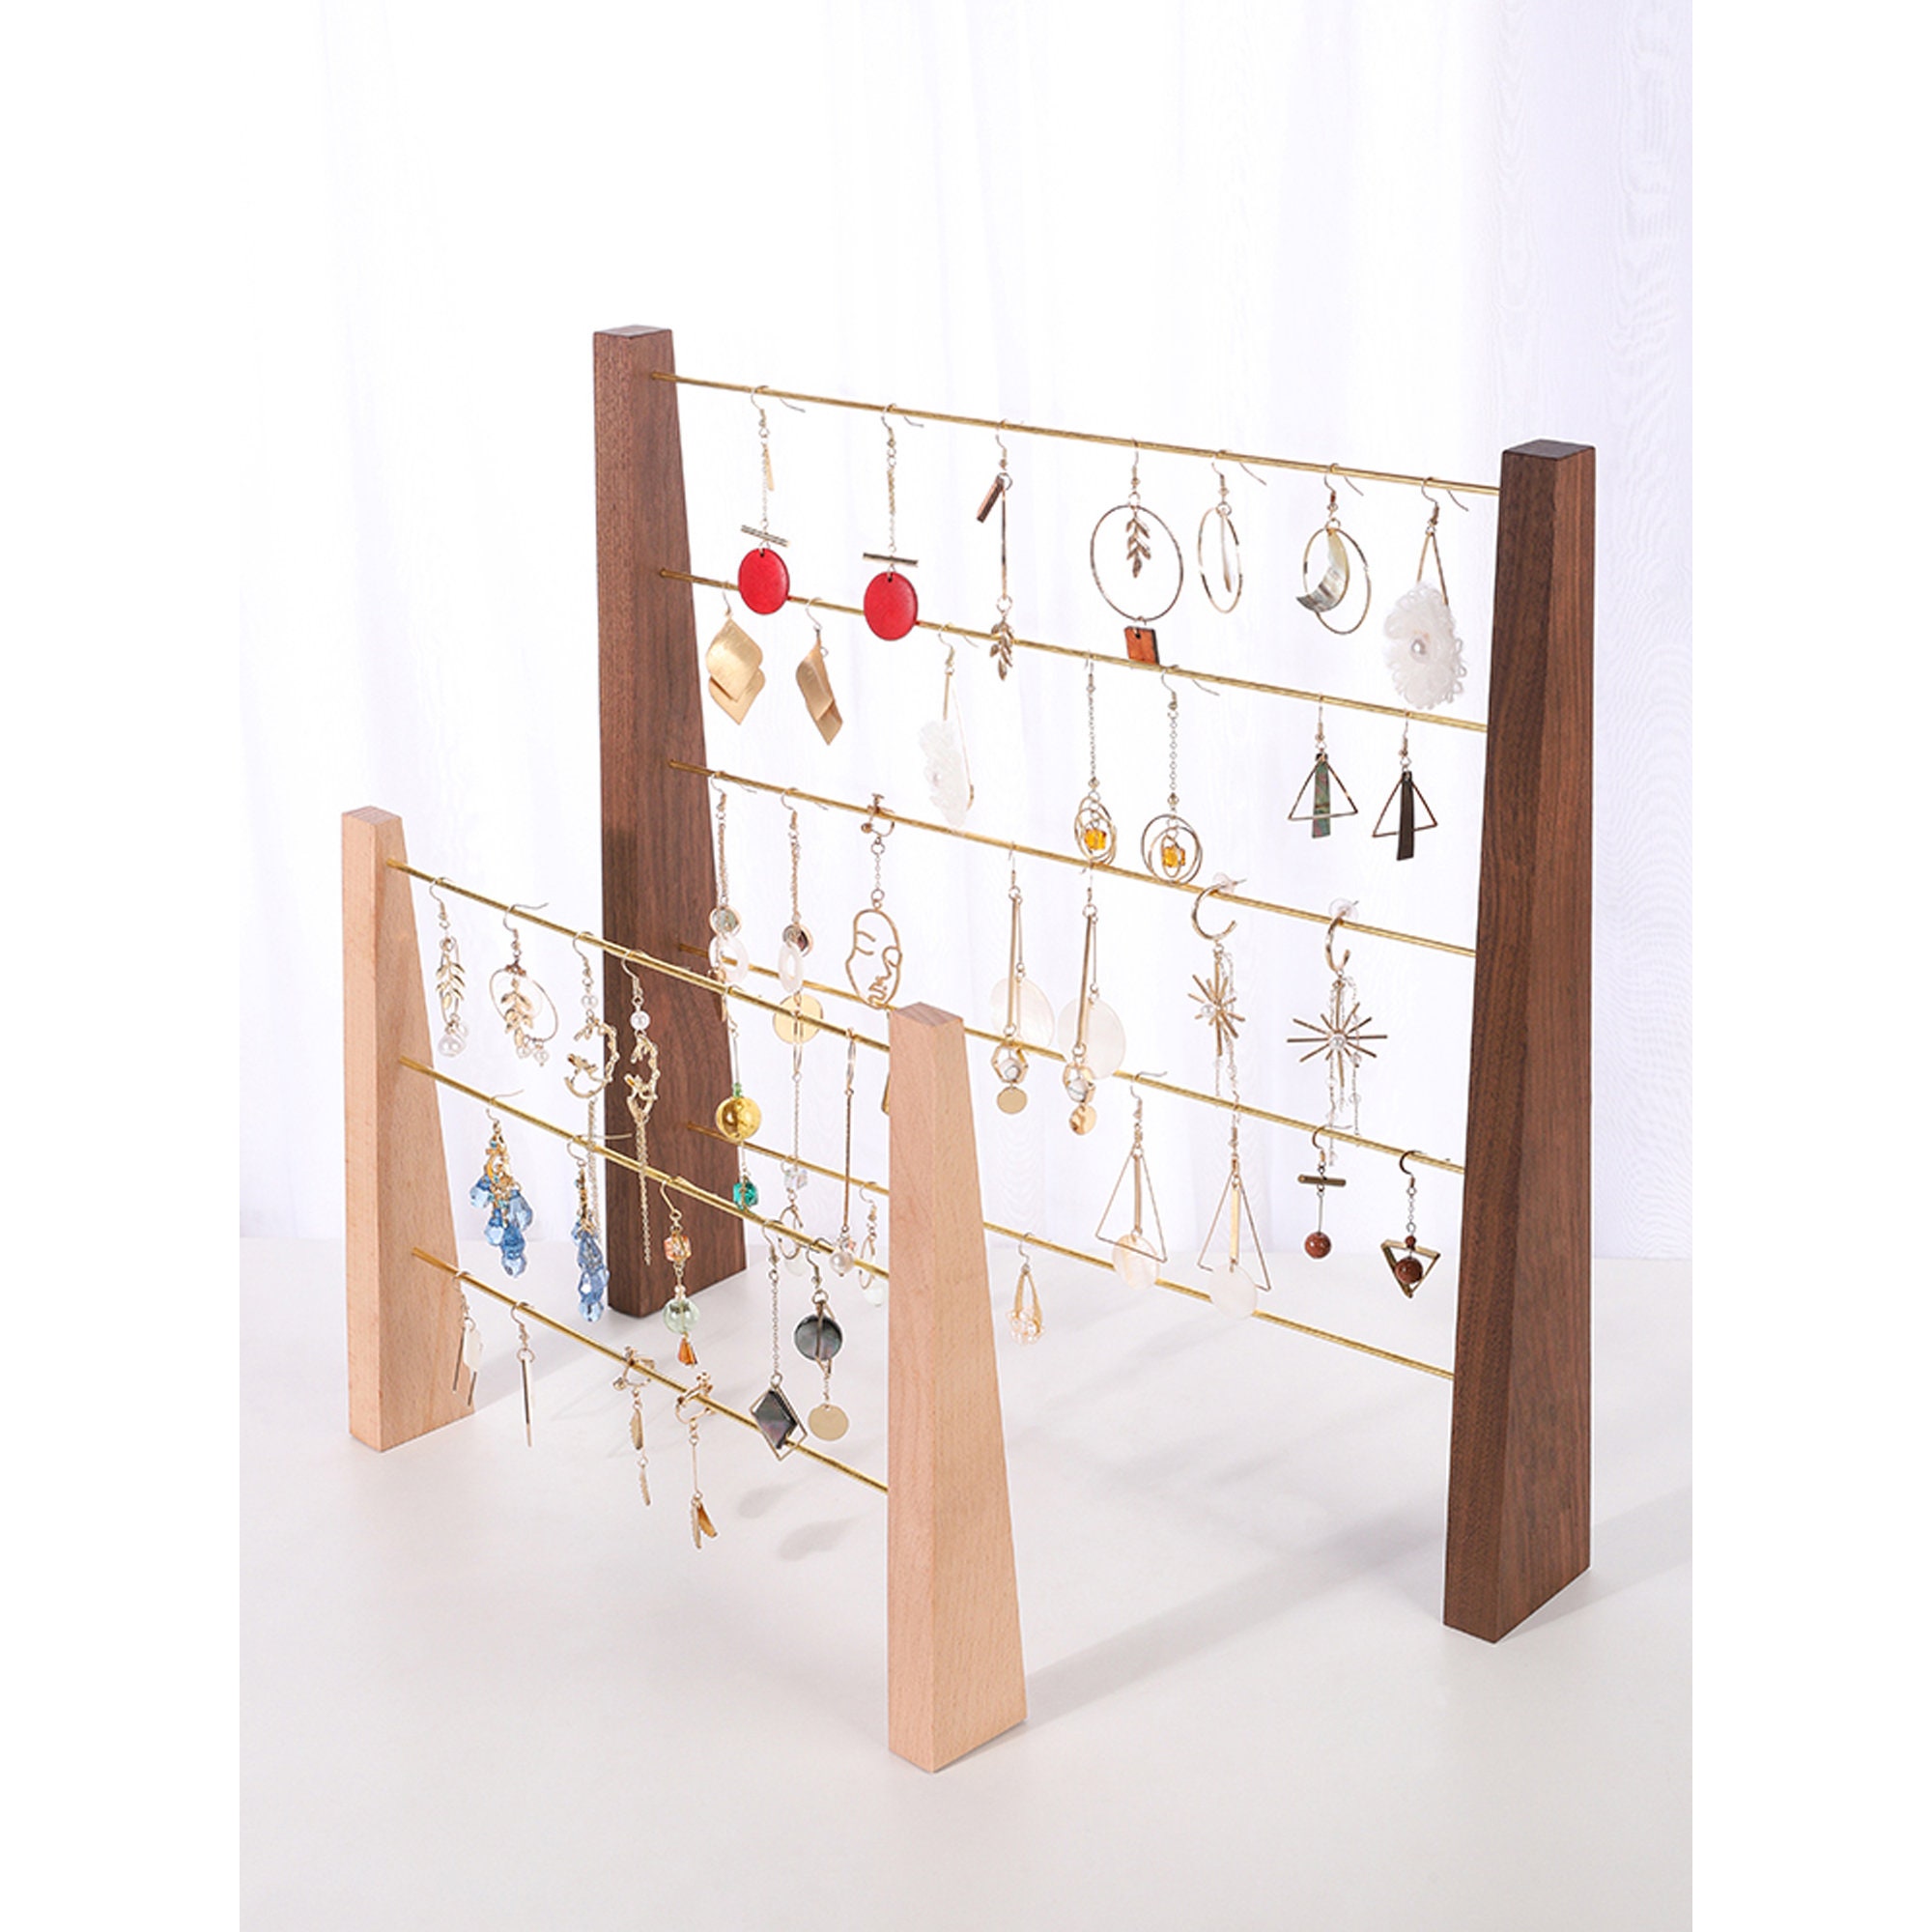 Poyilooo Earring Display for Selling, Solid Wood Jewelry Display